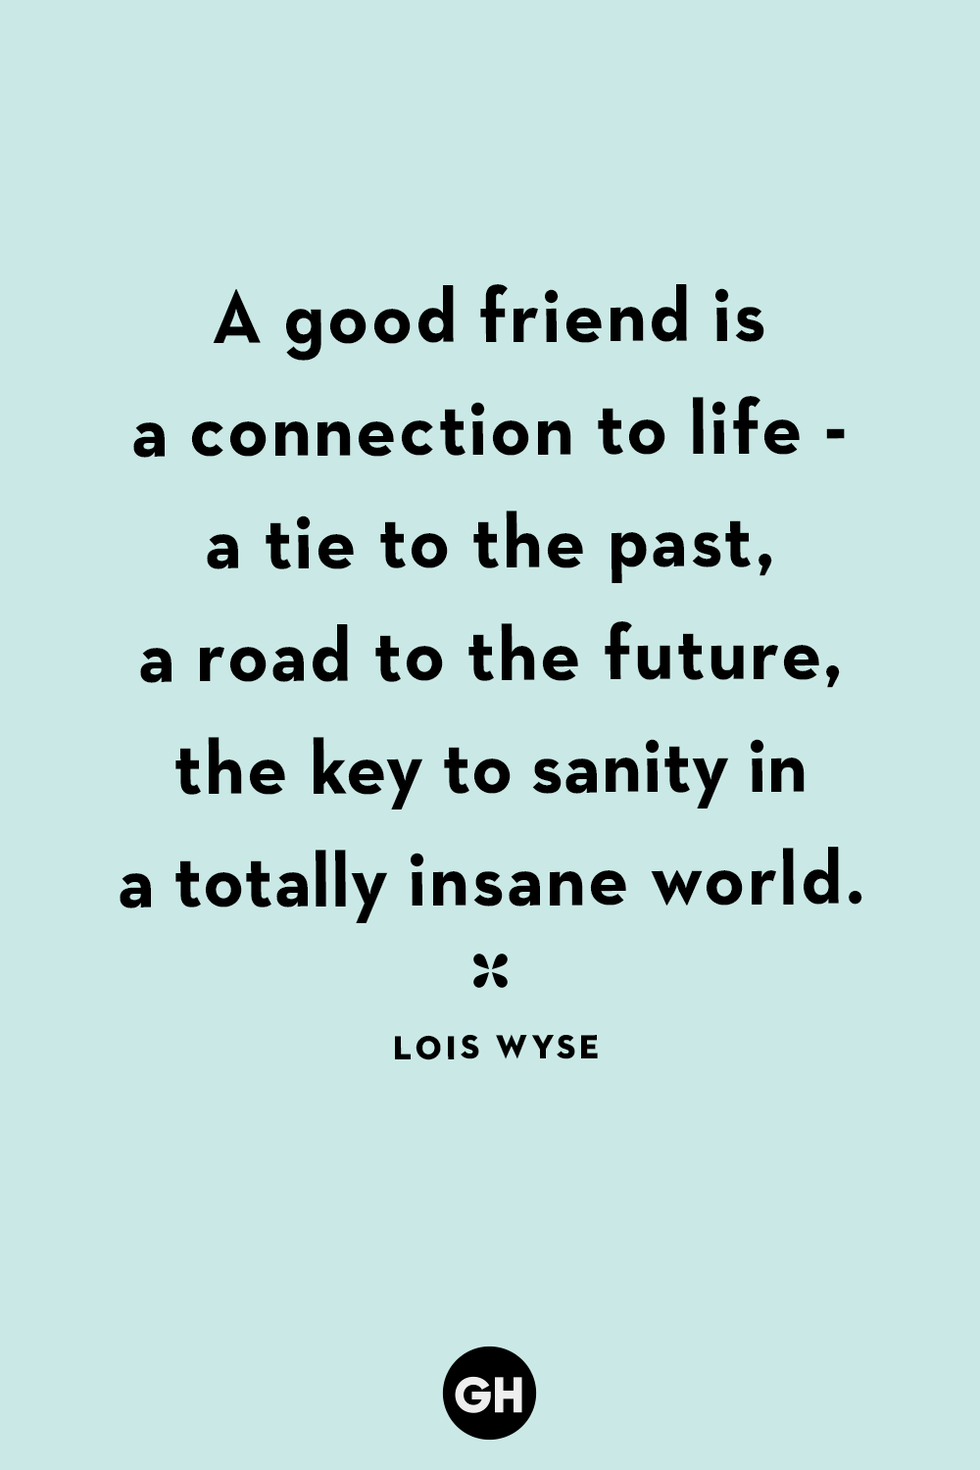 45 Best Friendship Quotes - Short Sayings About Best Friends